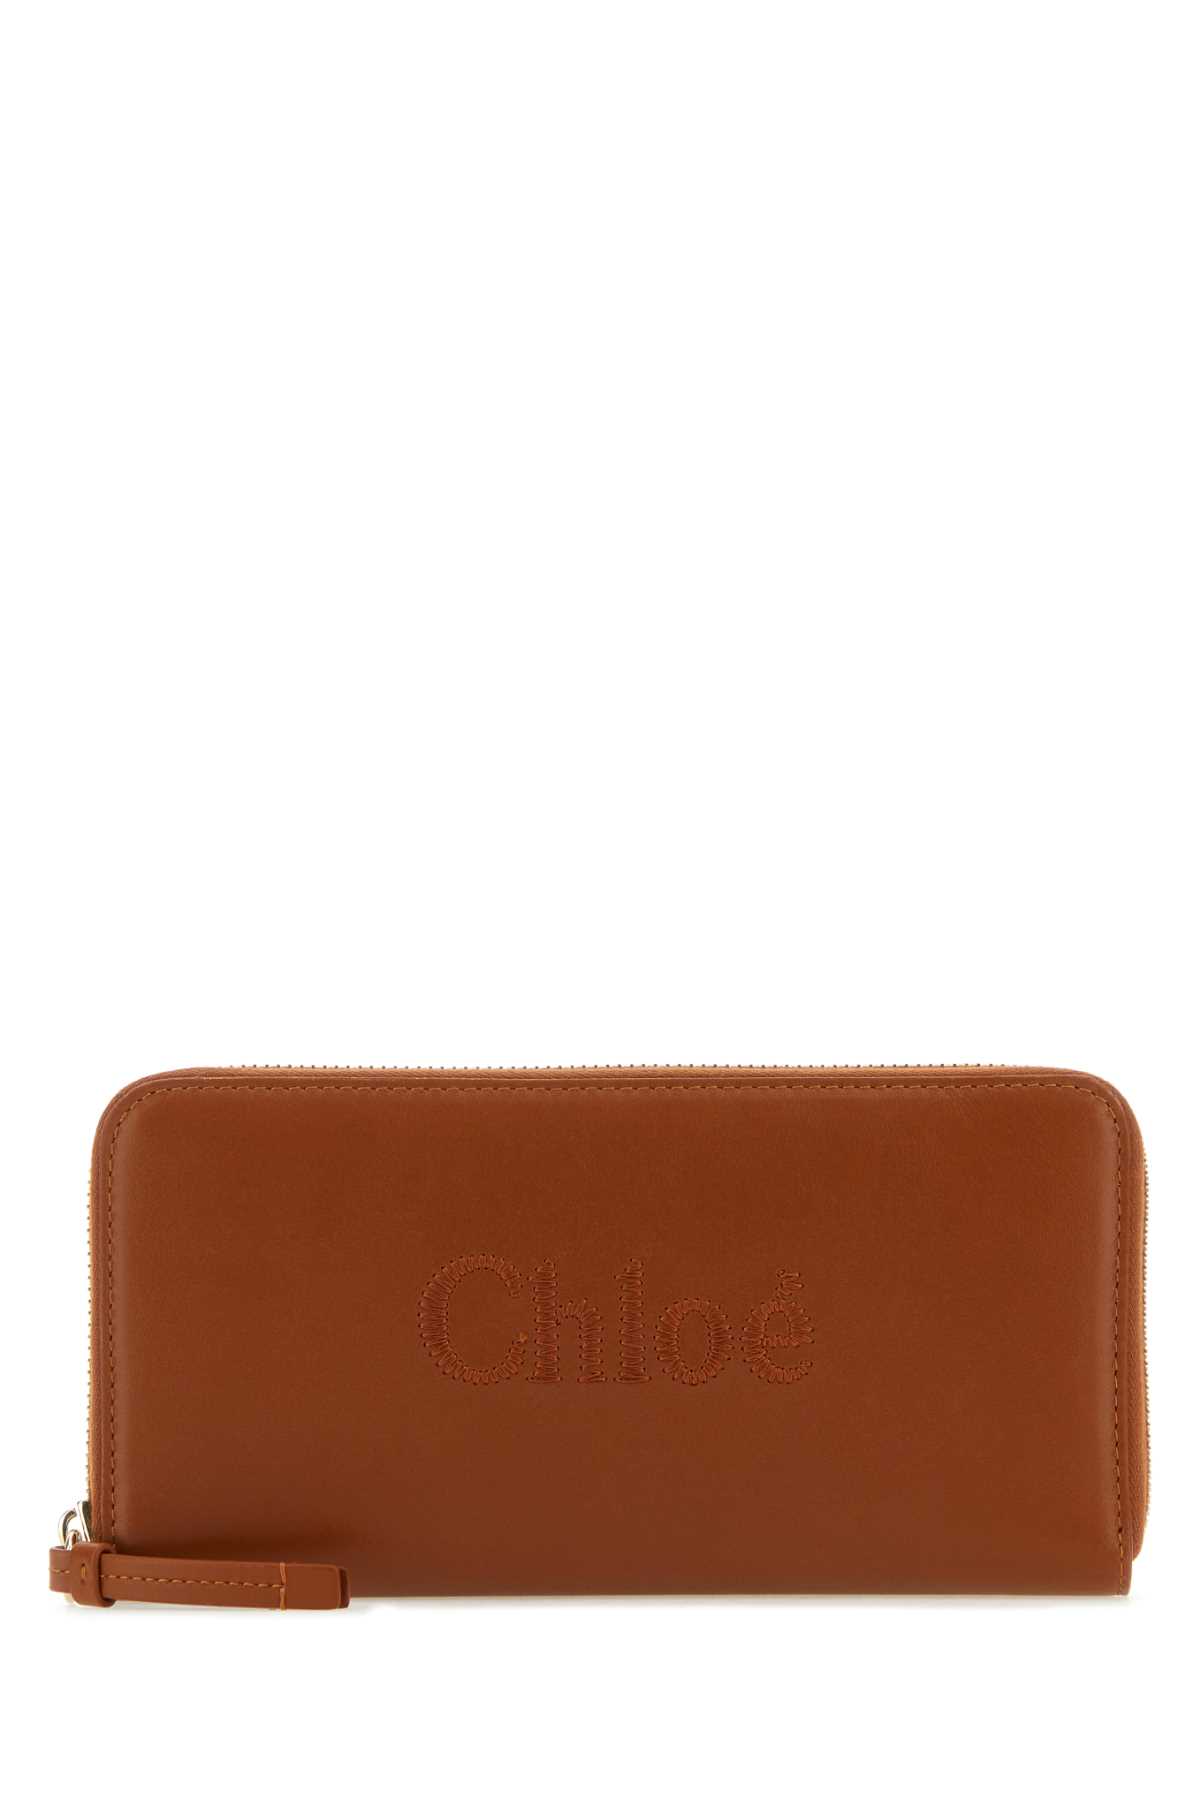 Shop Chloé Caramel Nappa Leather Wallet